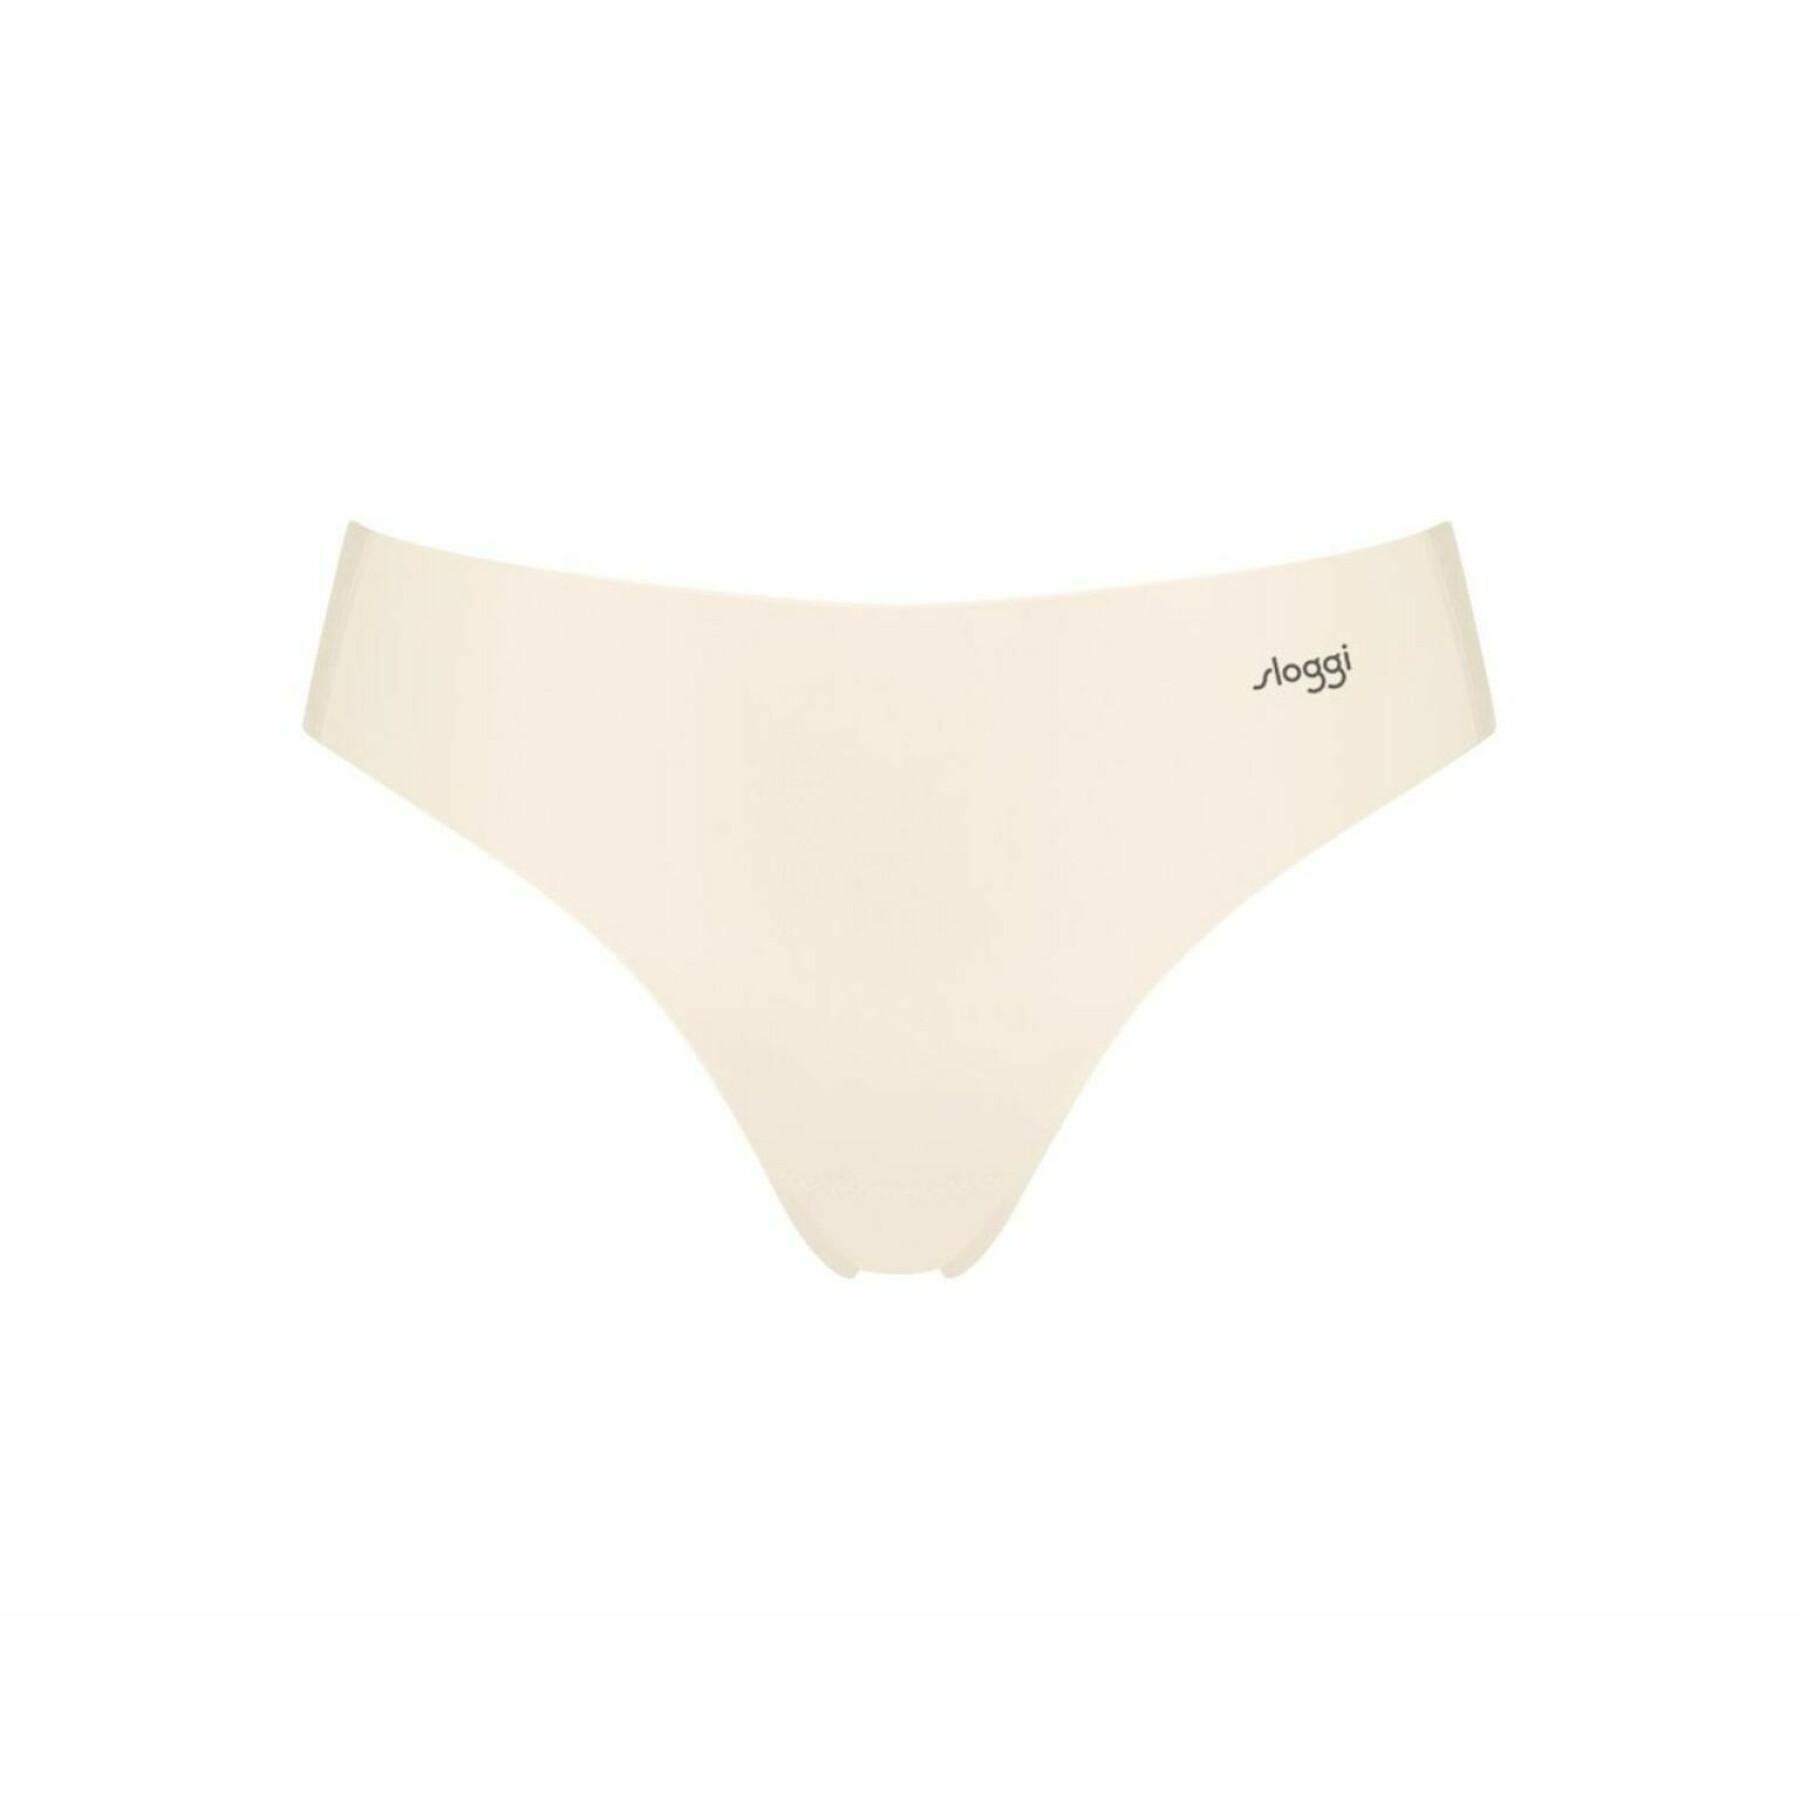 Women's panties Sloggi ZERO Feel EX - Underwear - Women's Clothing